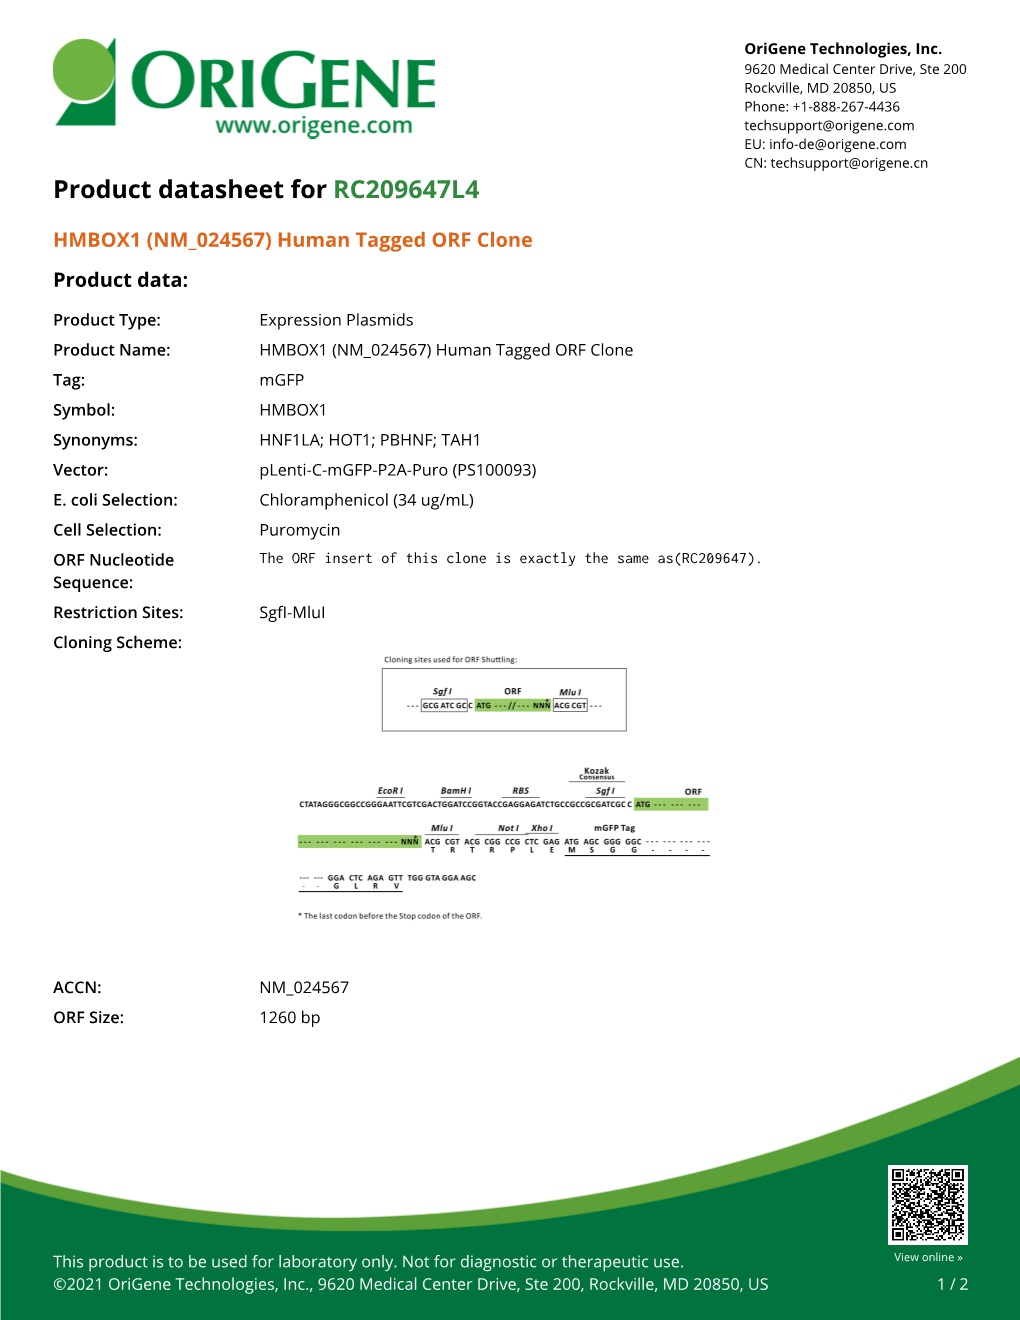 HMBOX1 (NM 024567) Human Tagged ORF Clone Product Data